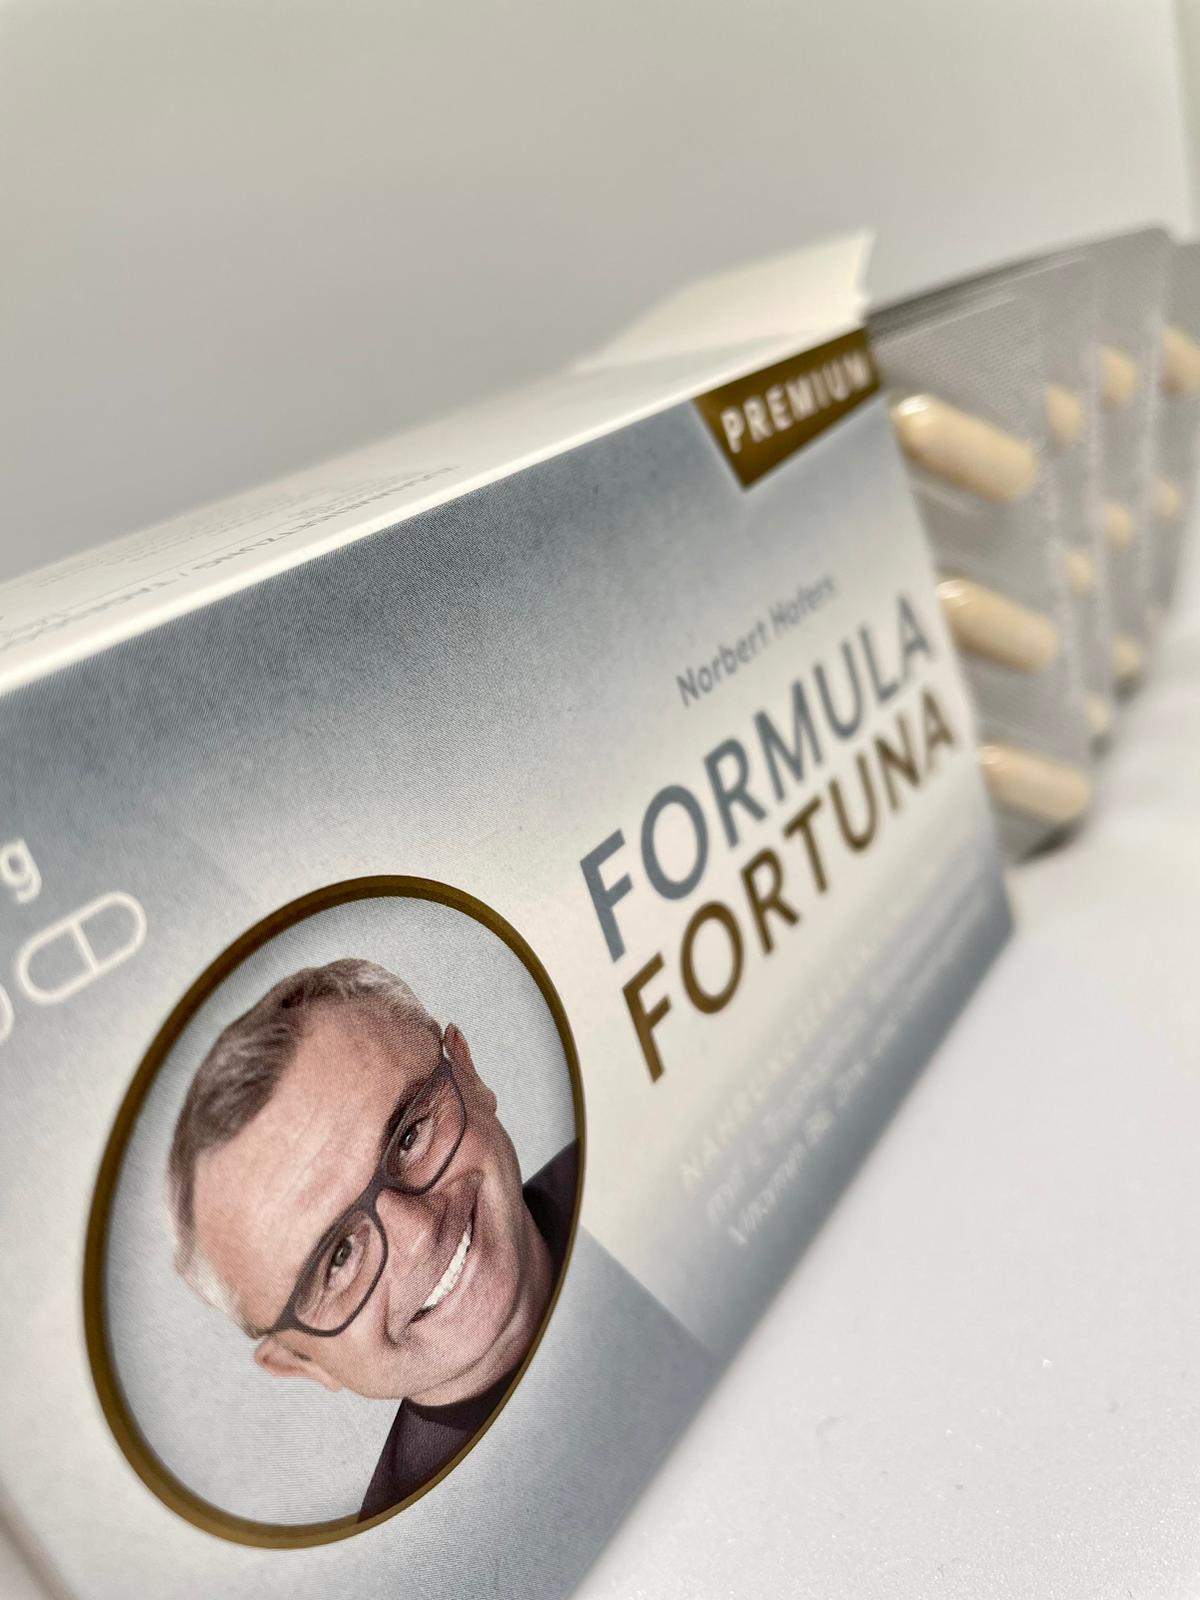 NORBERT HOFER Norbert Hofer´s  Premium Formula Fortuna - 24 g 